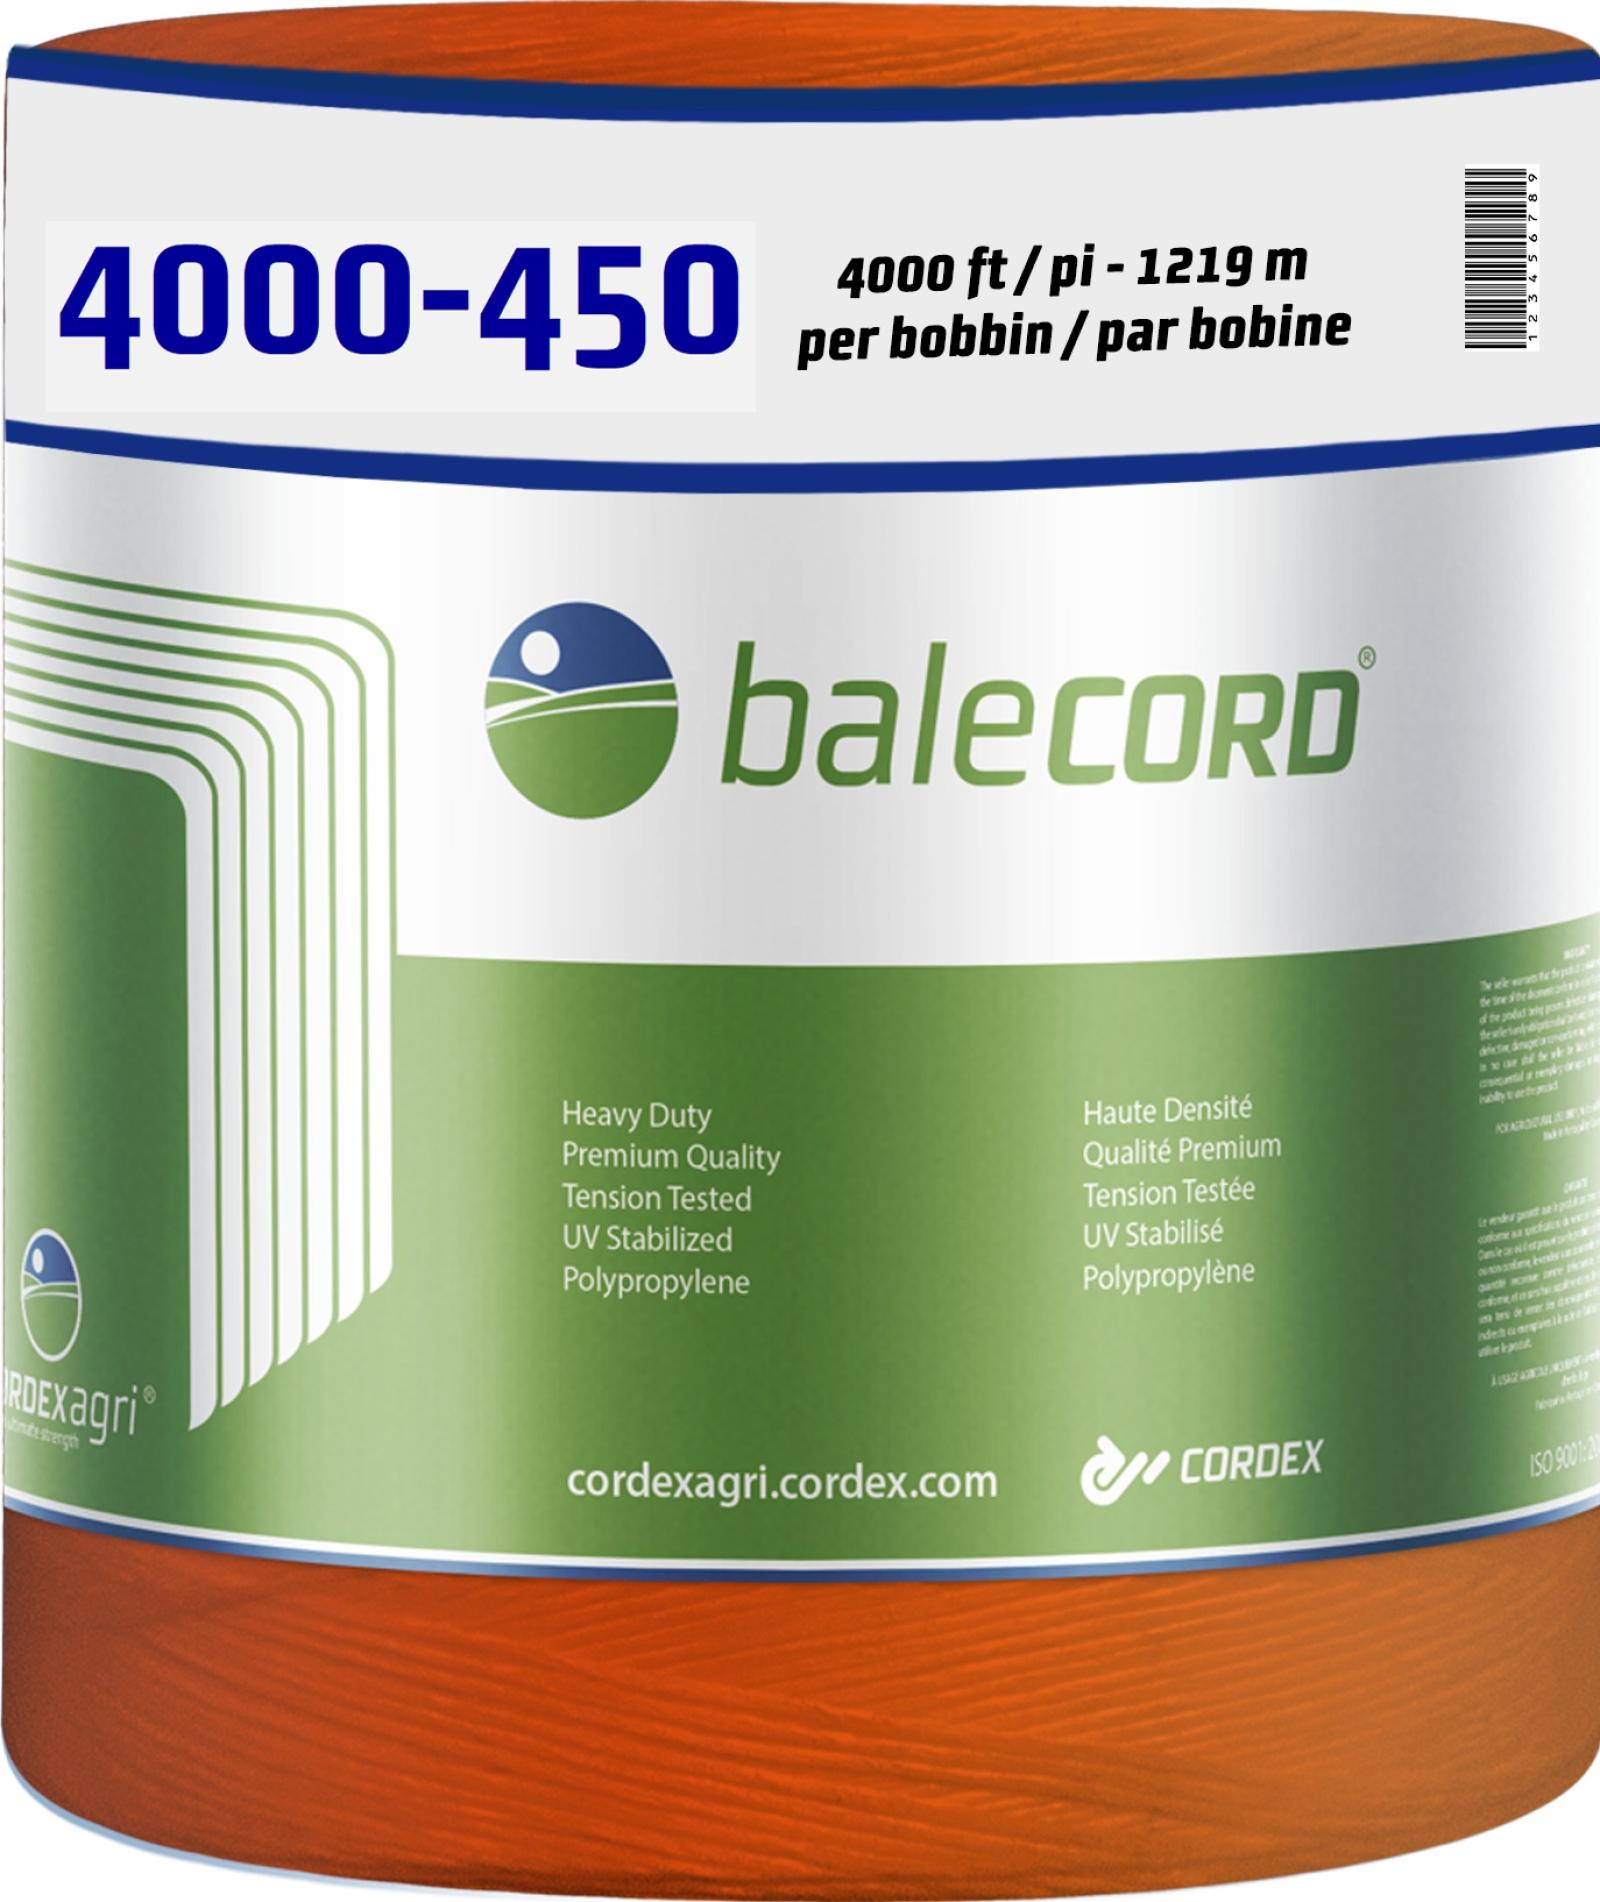 Cordex Balecord 450lb Knot Strength Orange Baler Twine